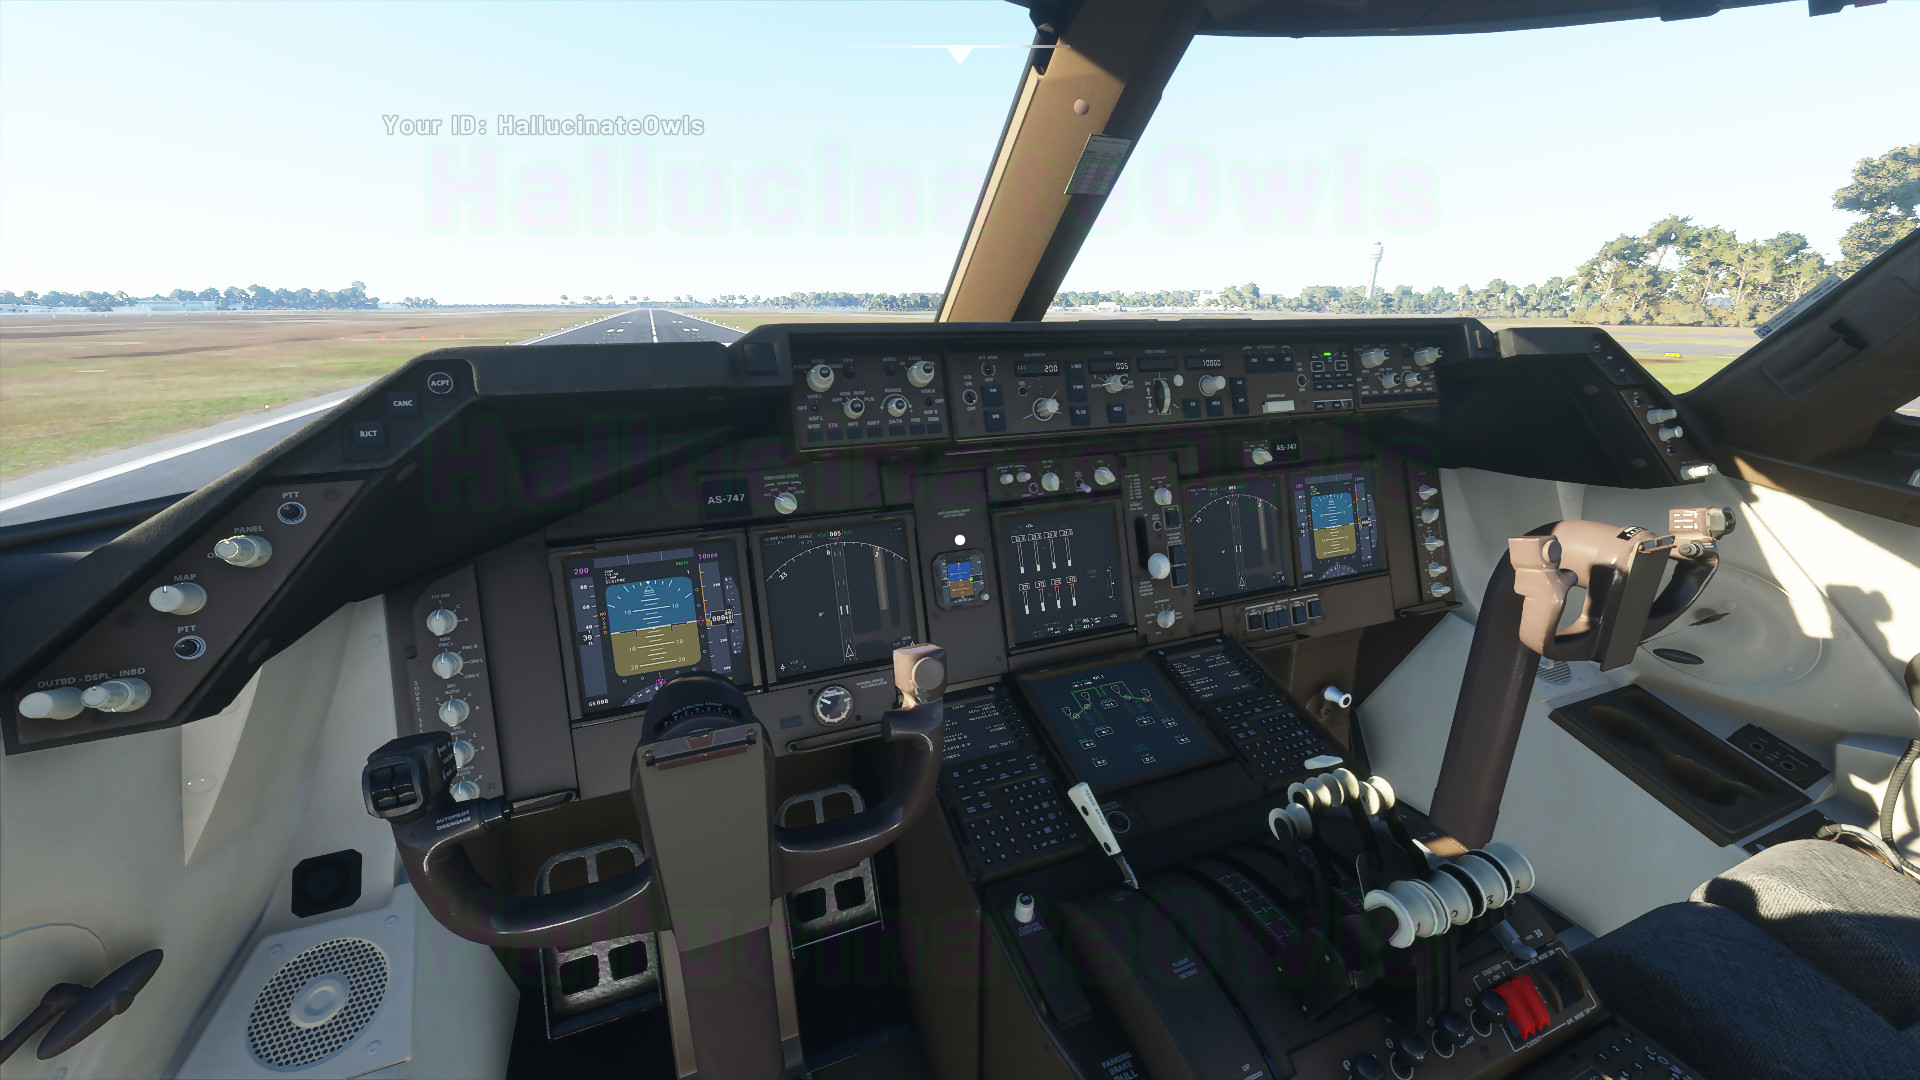 Microsoft Flight Simulator' pesa tanto que Steam ha tenido que